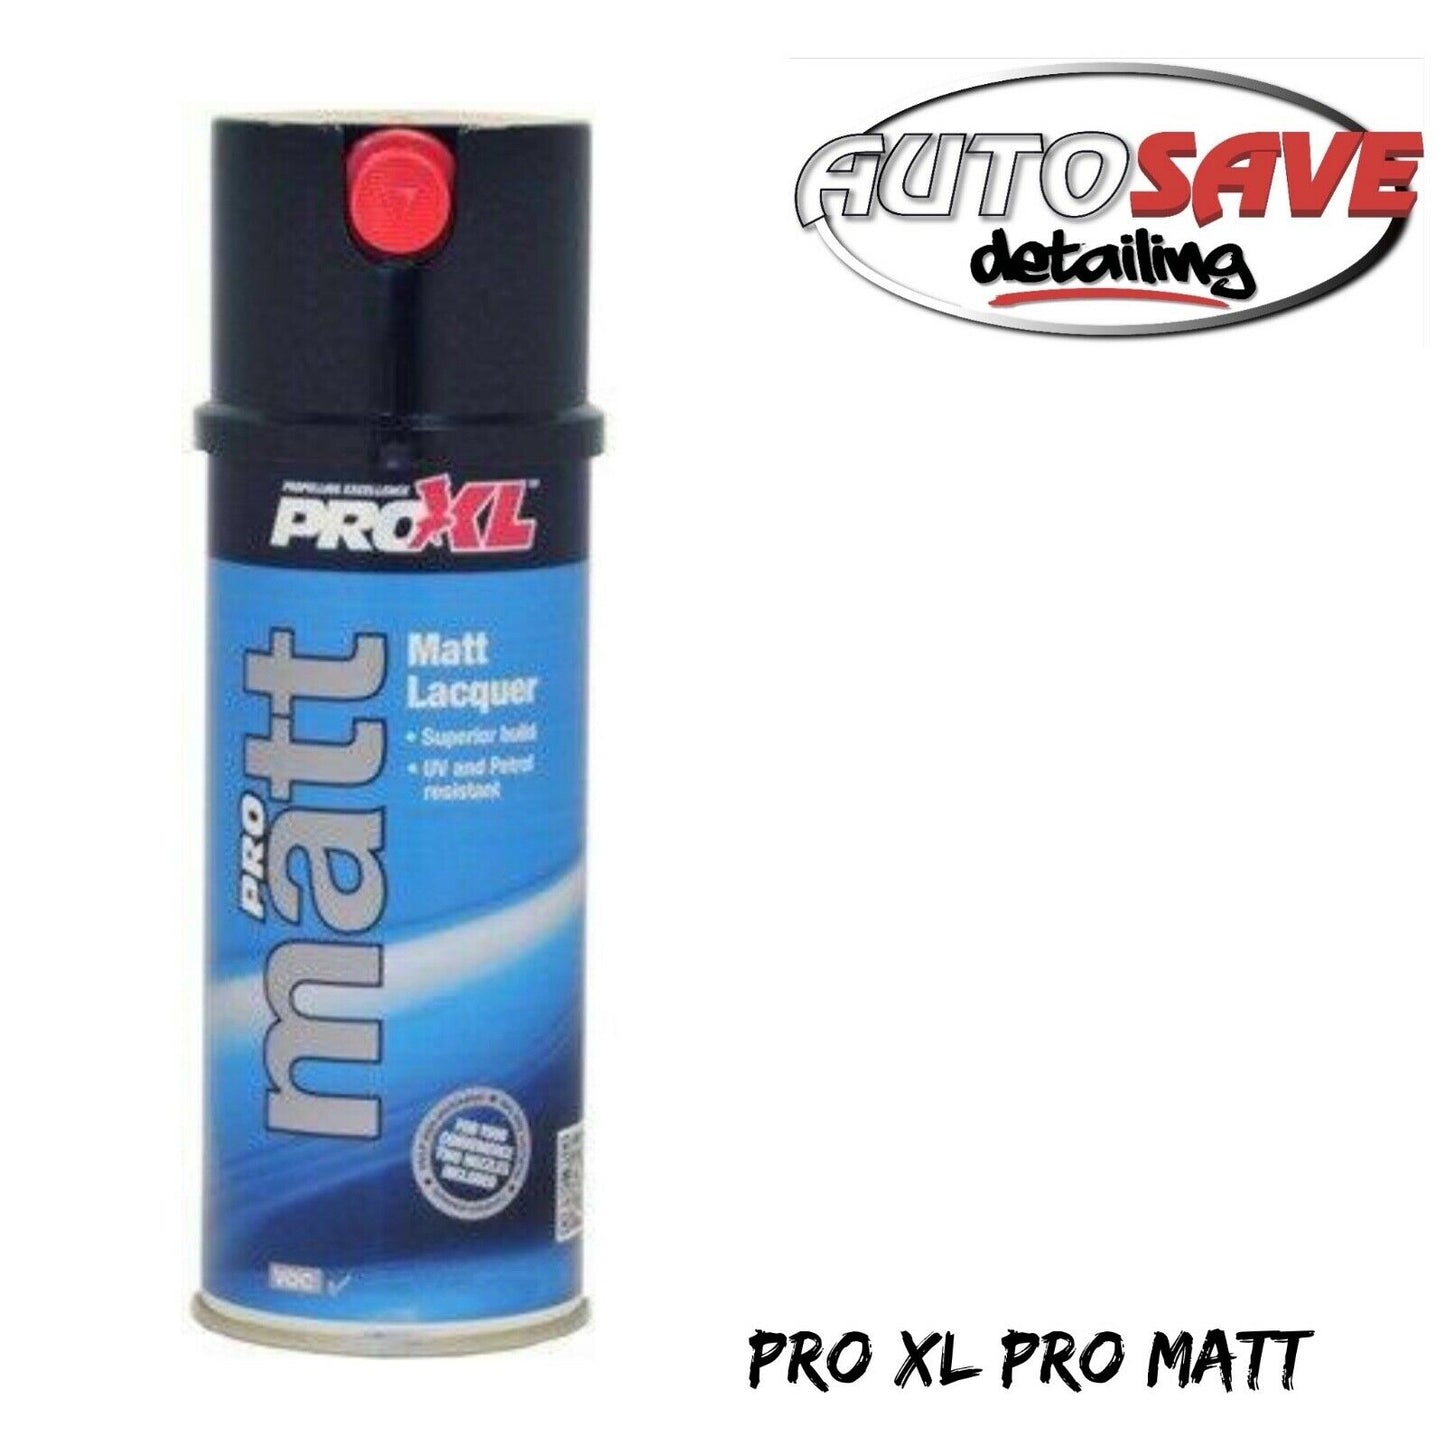 Pro XL Pro Matt Aerosol Lacquer 400ml PROXL PROMATT